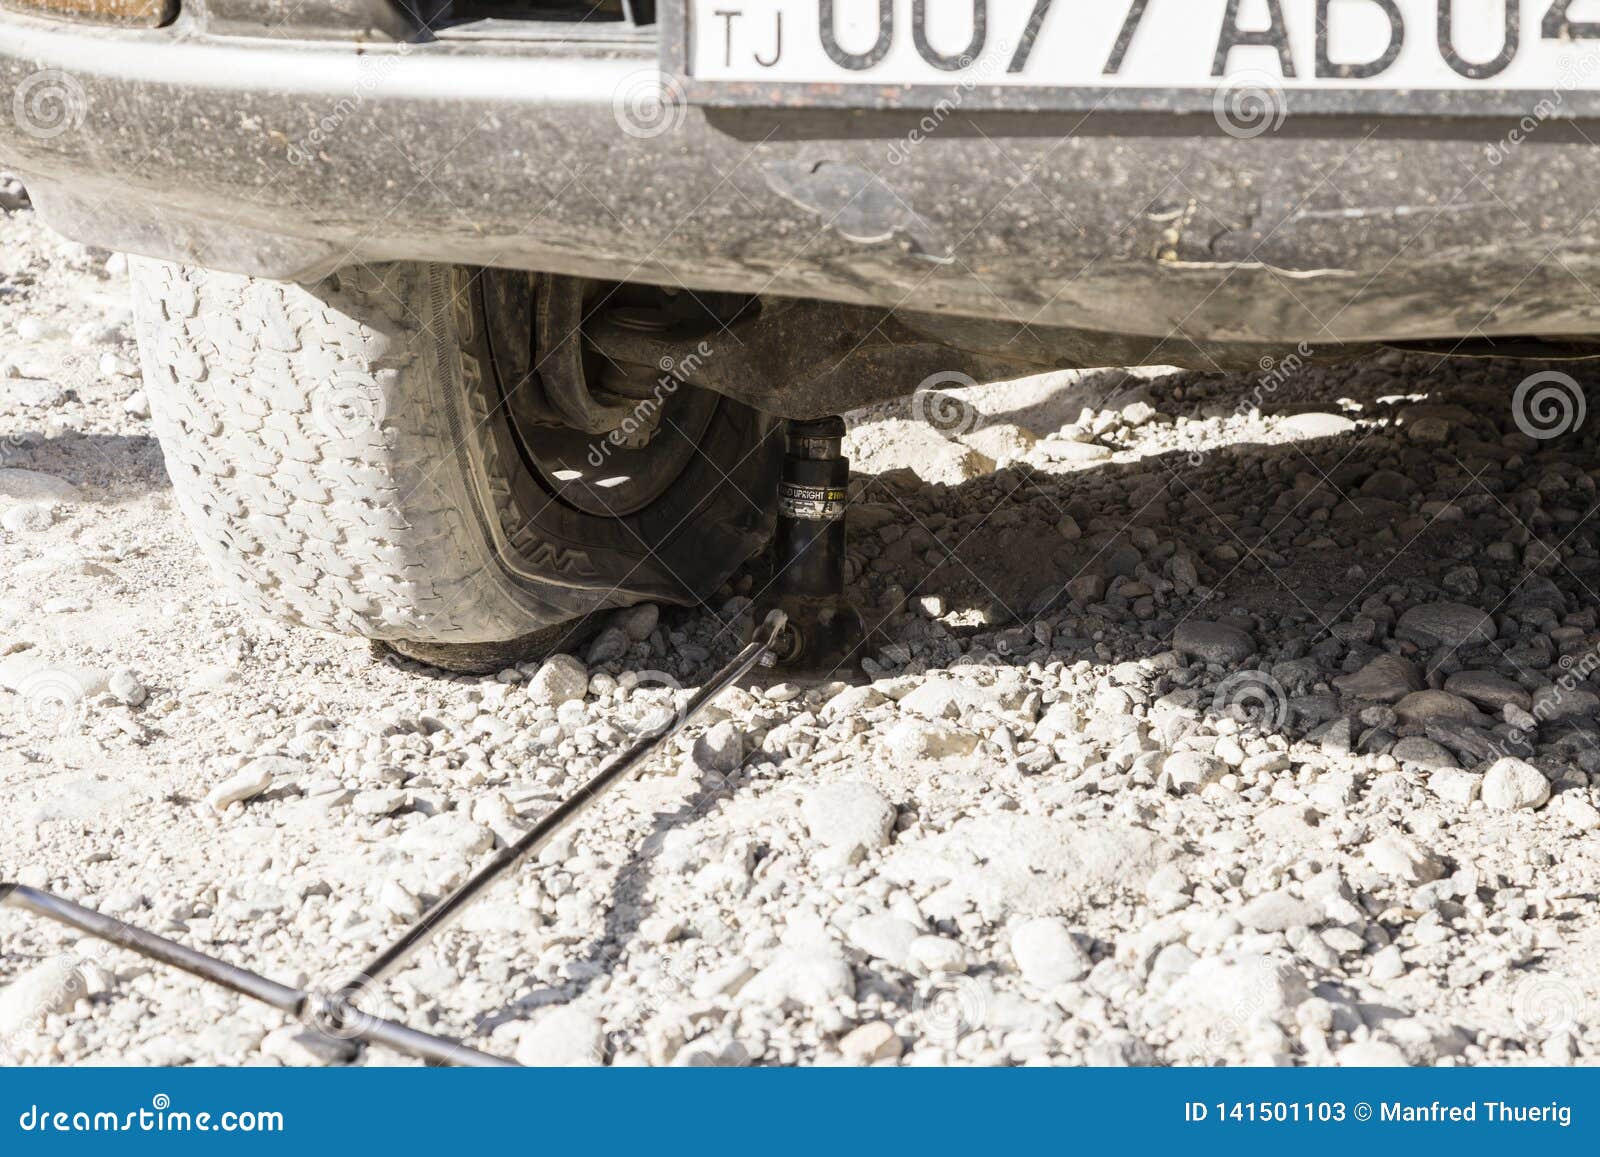 Langar, Tajikistan, August 23 2018: Repair Of A Flat Tire ...